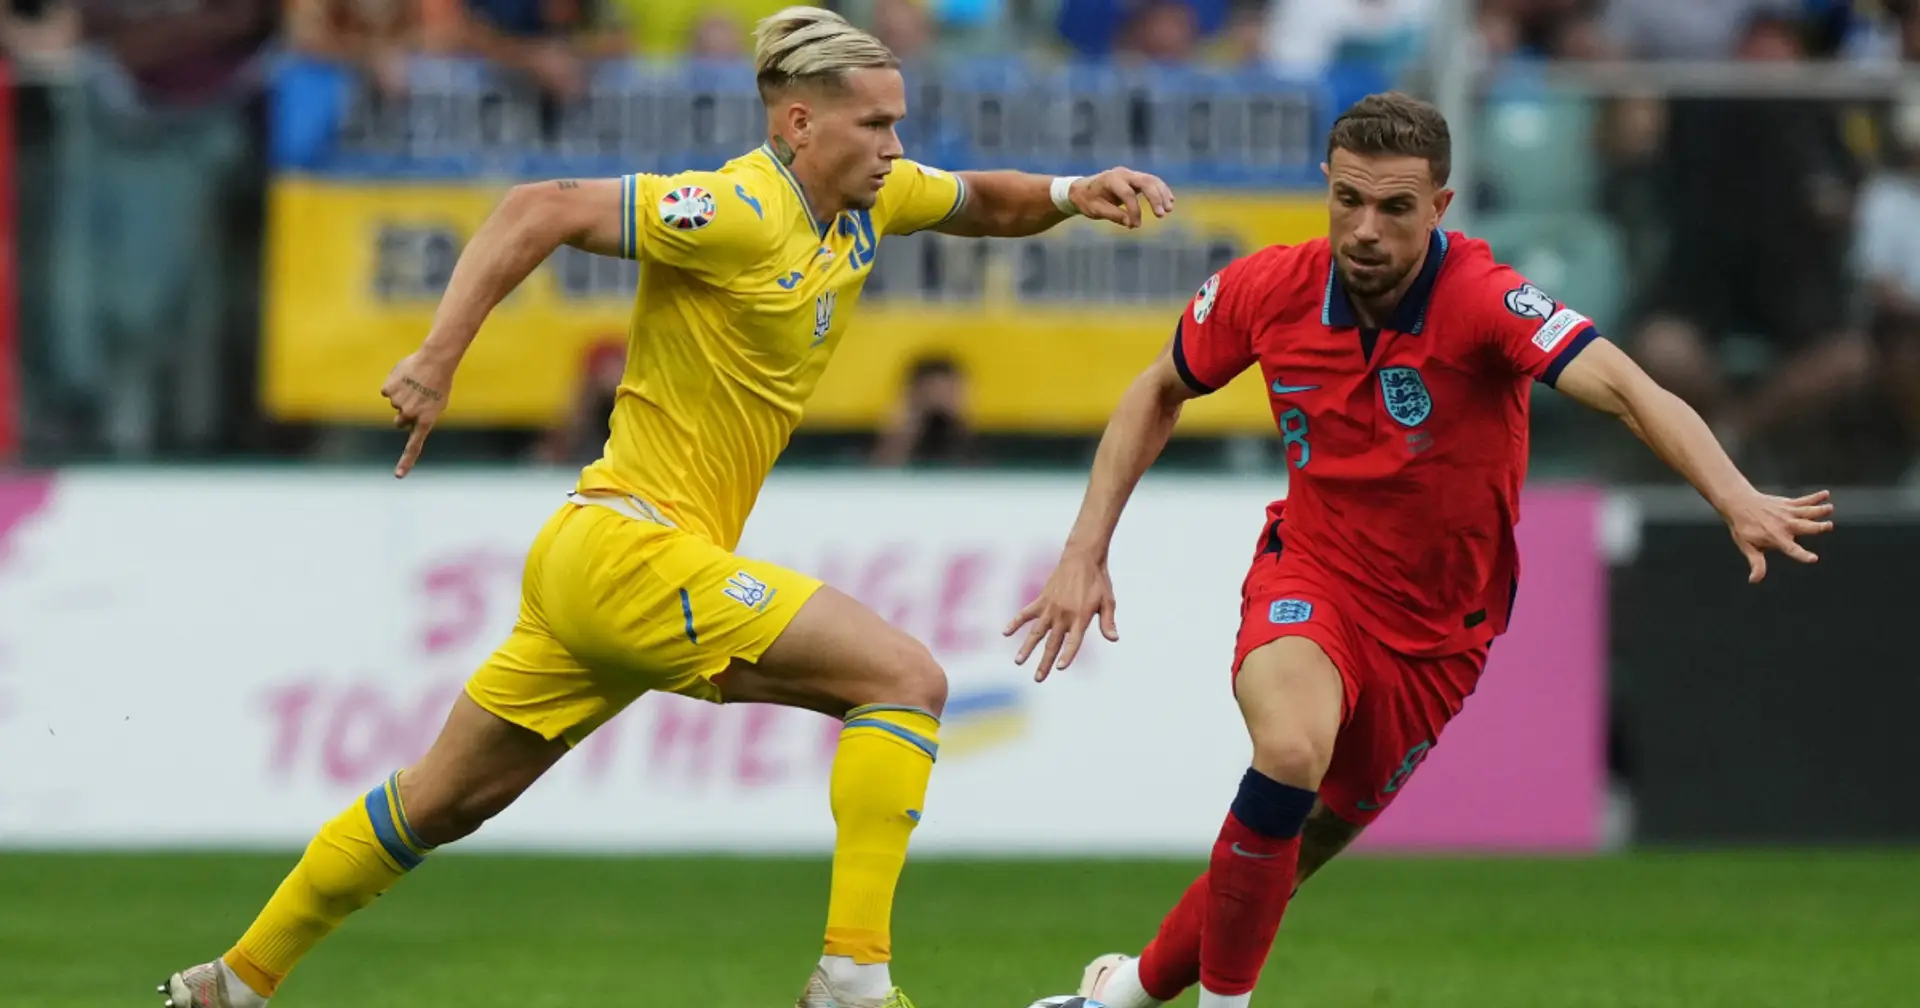 Mykhailo Mudryk hobbles off the pitch in Ukraine's Euro qualifier vs England